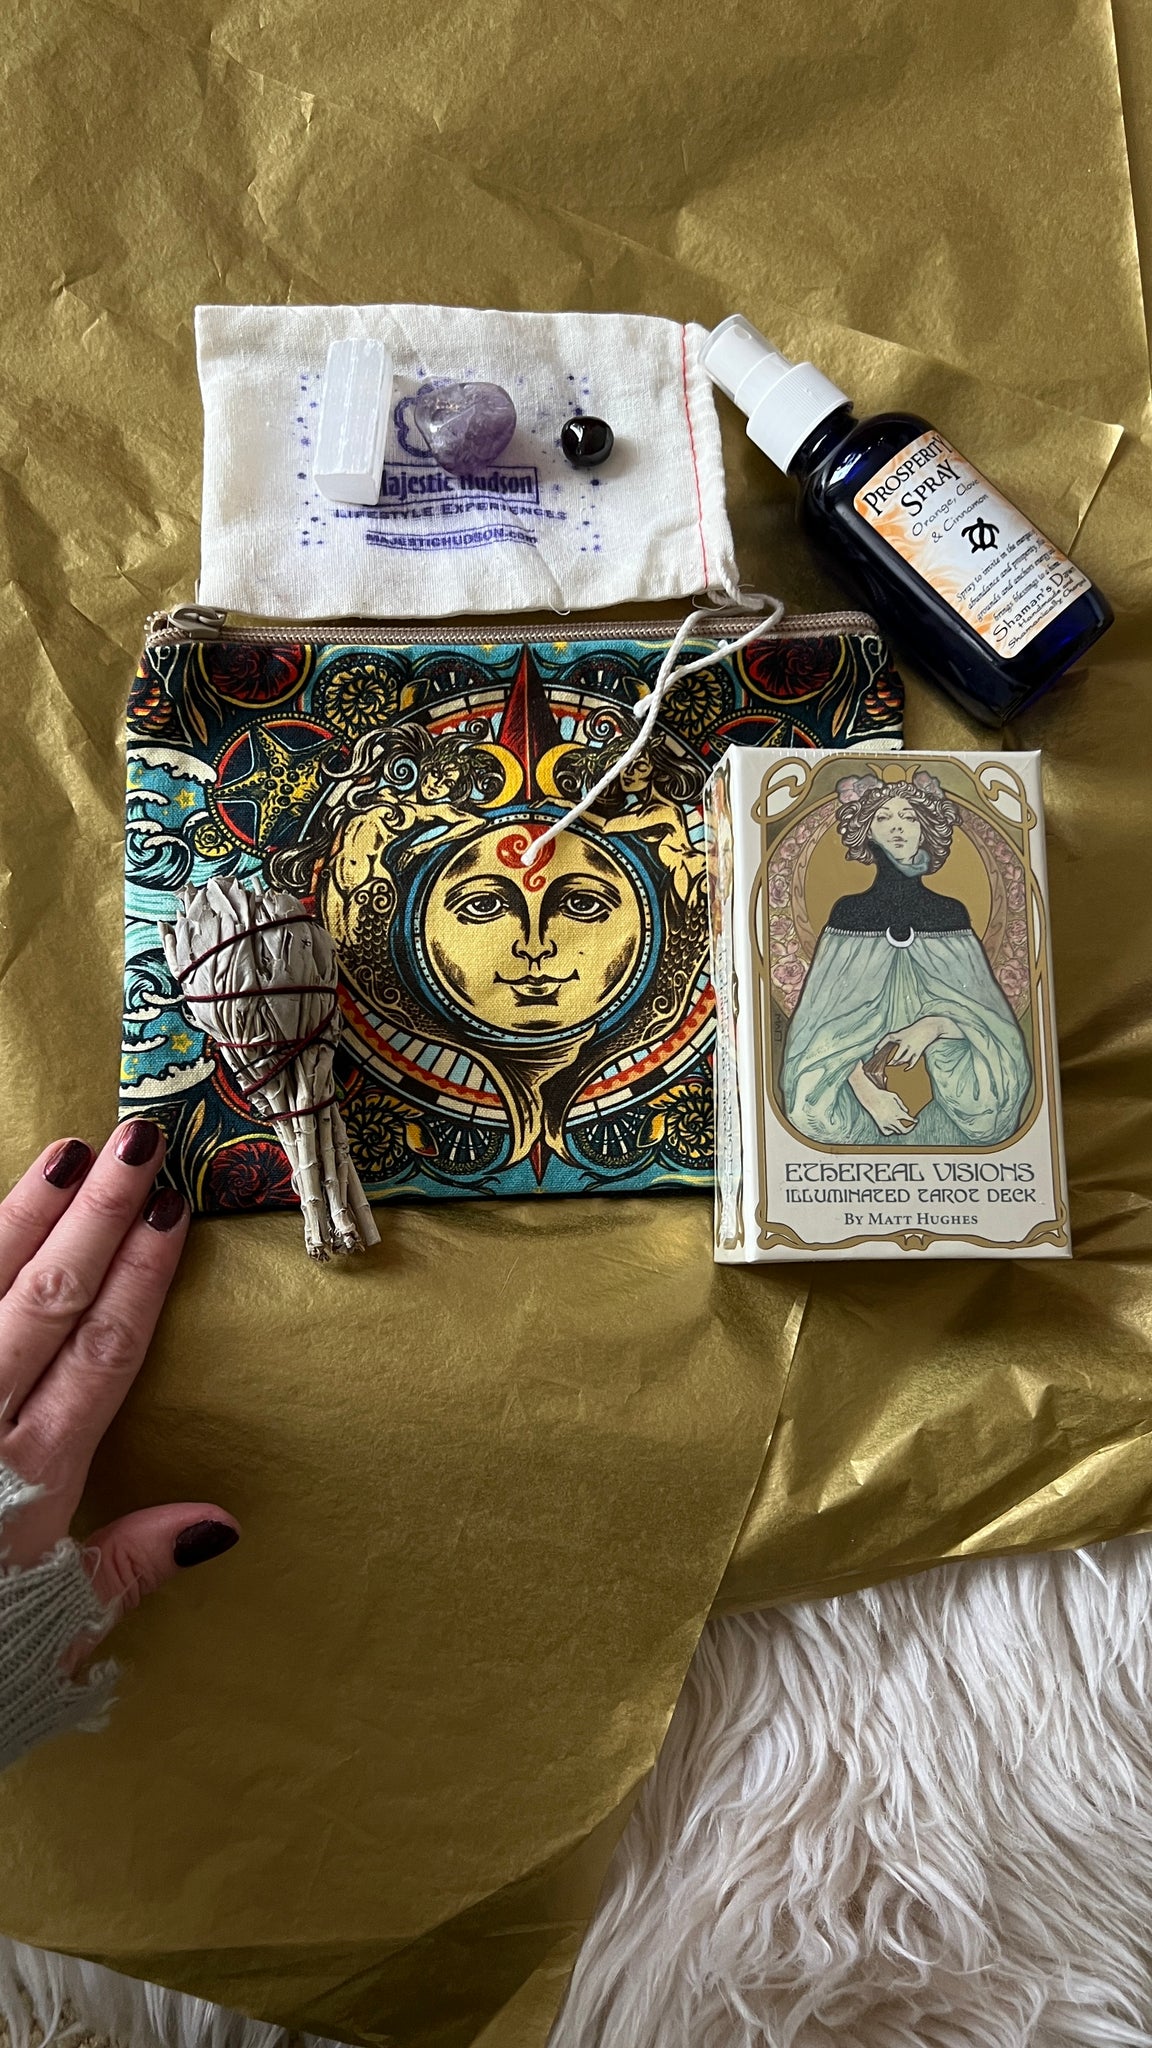 Awaken to Tarot  | Gift Box Set